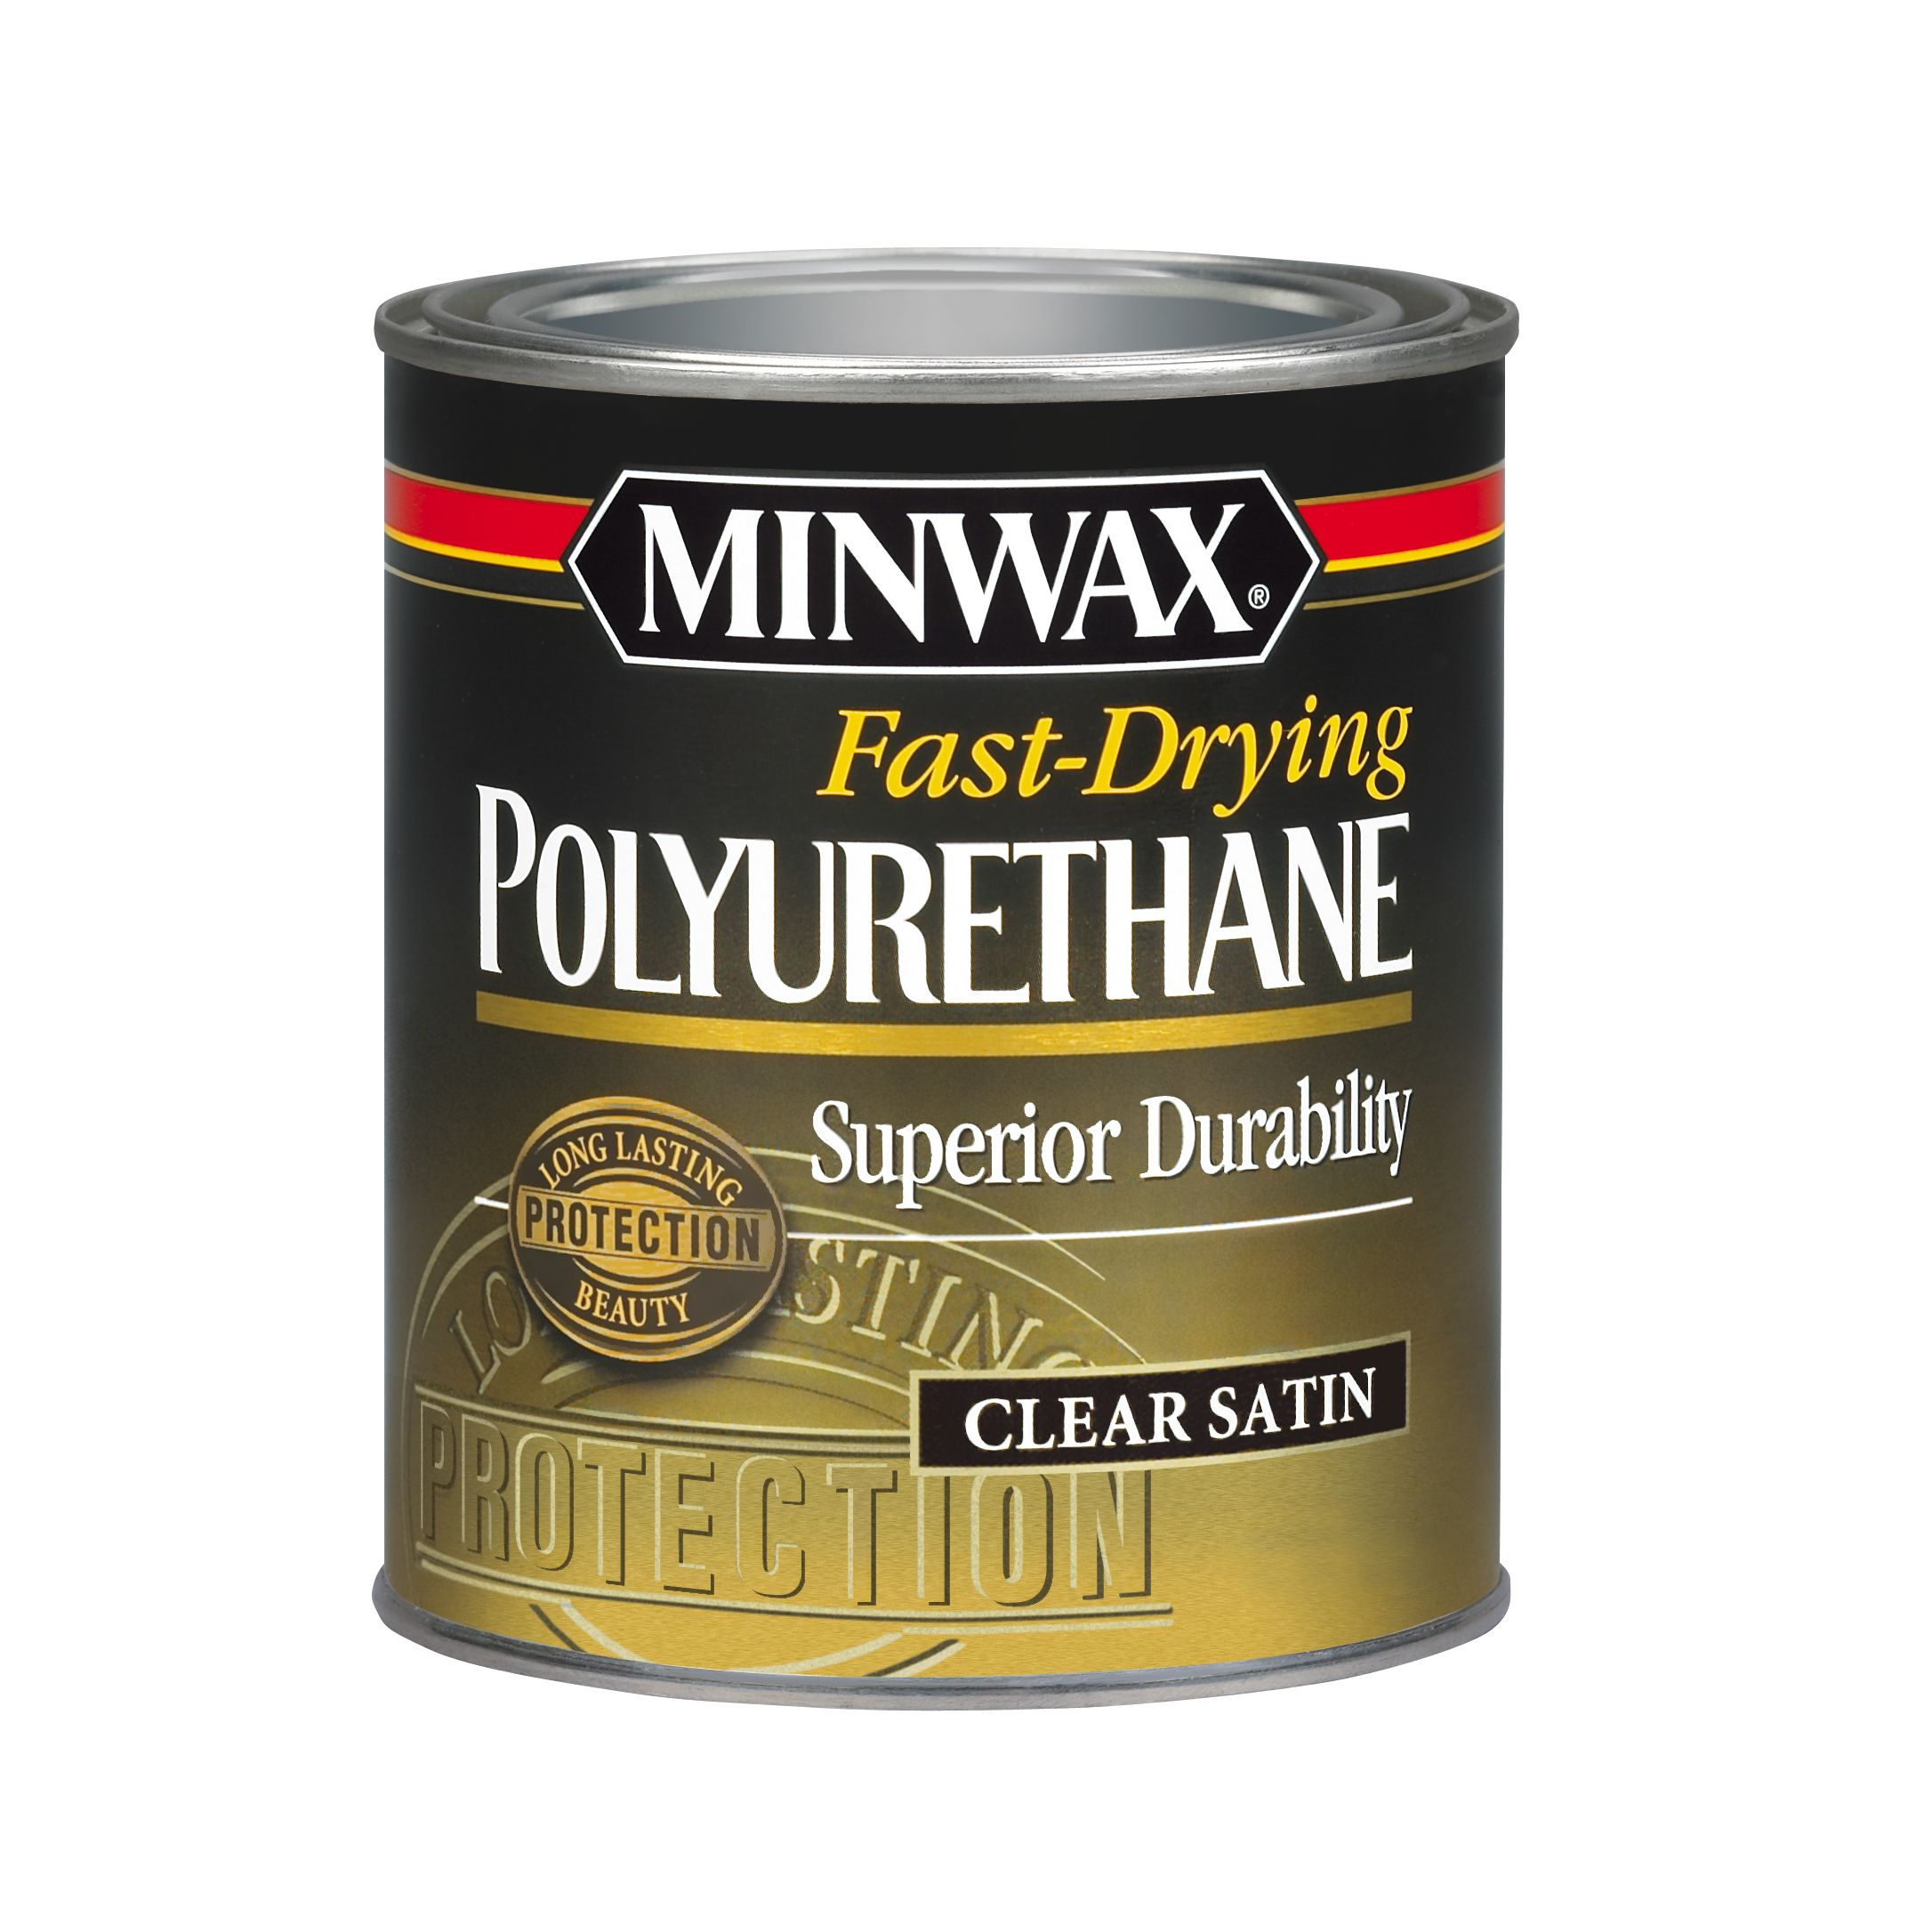 Minwax Fast-Drying Polyurethane, 8 oz - Satin